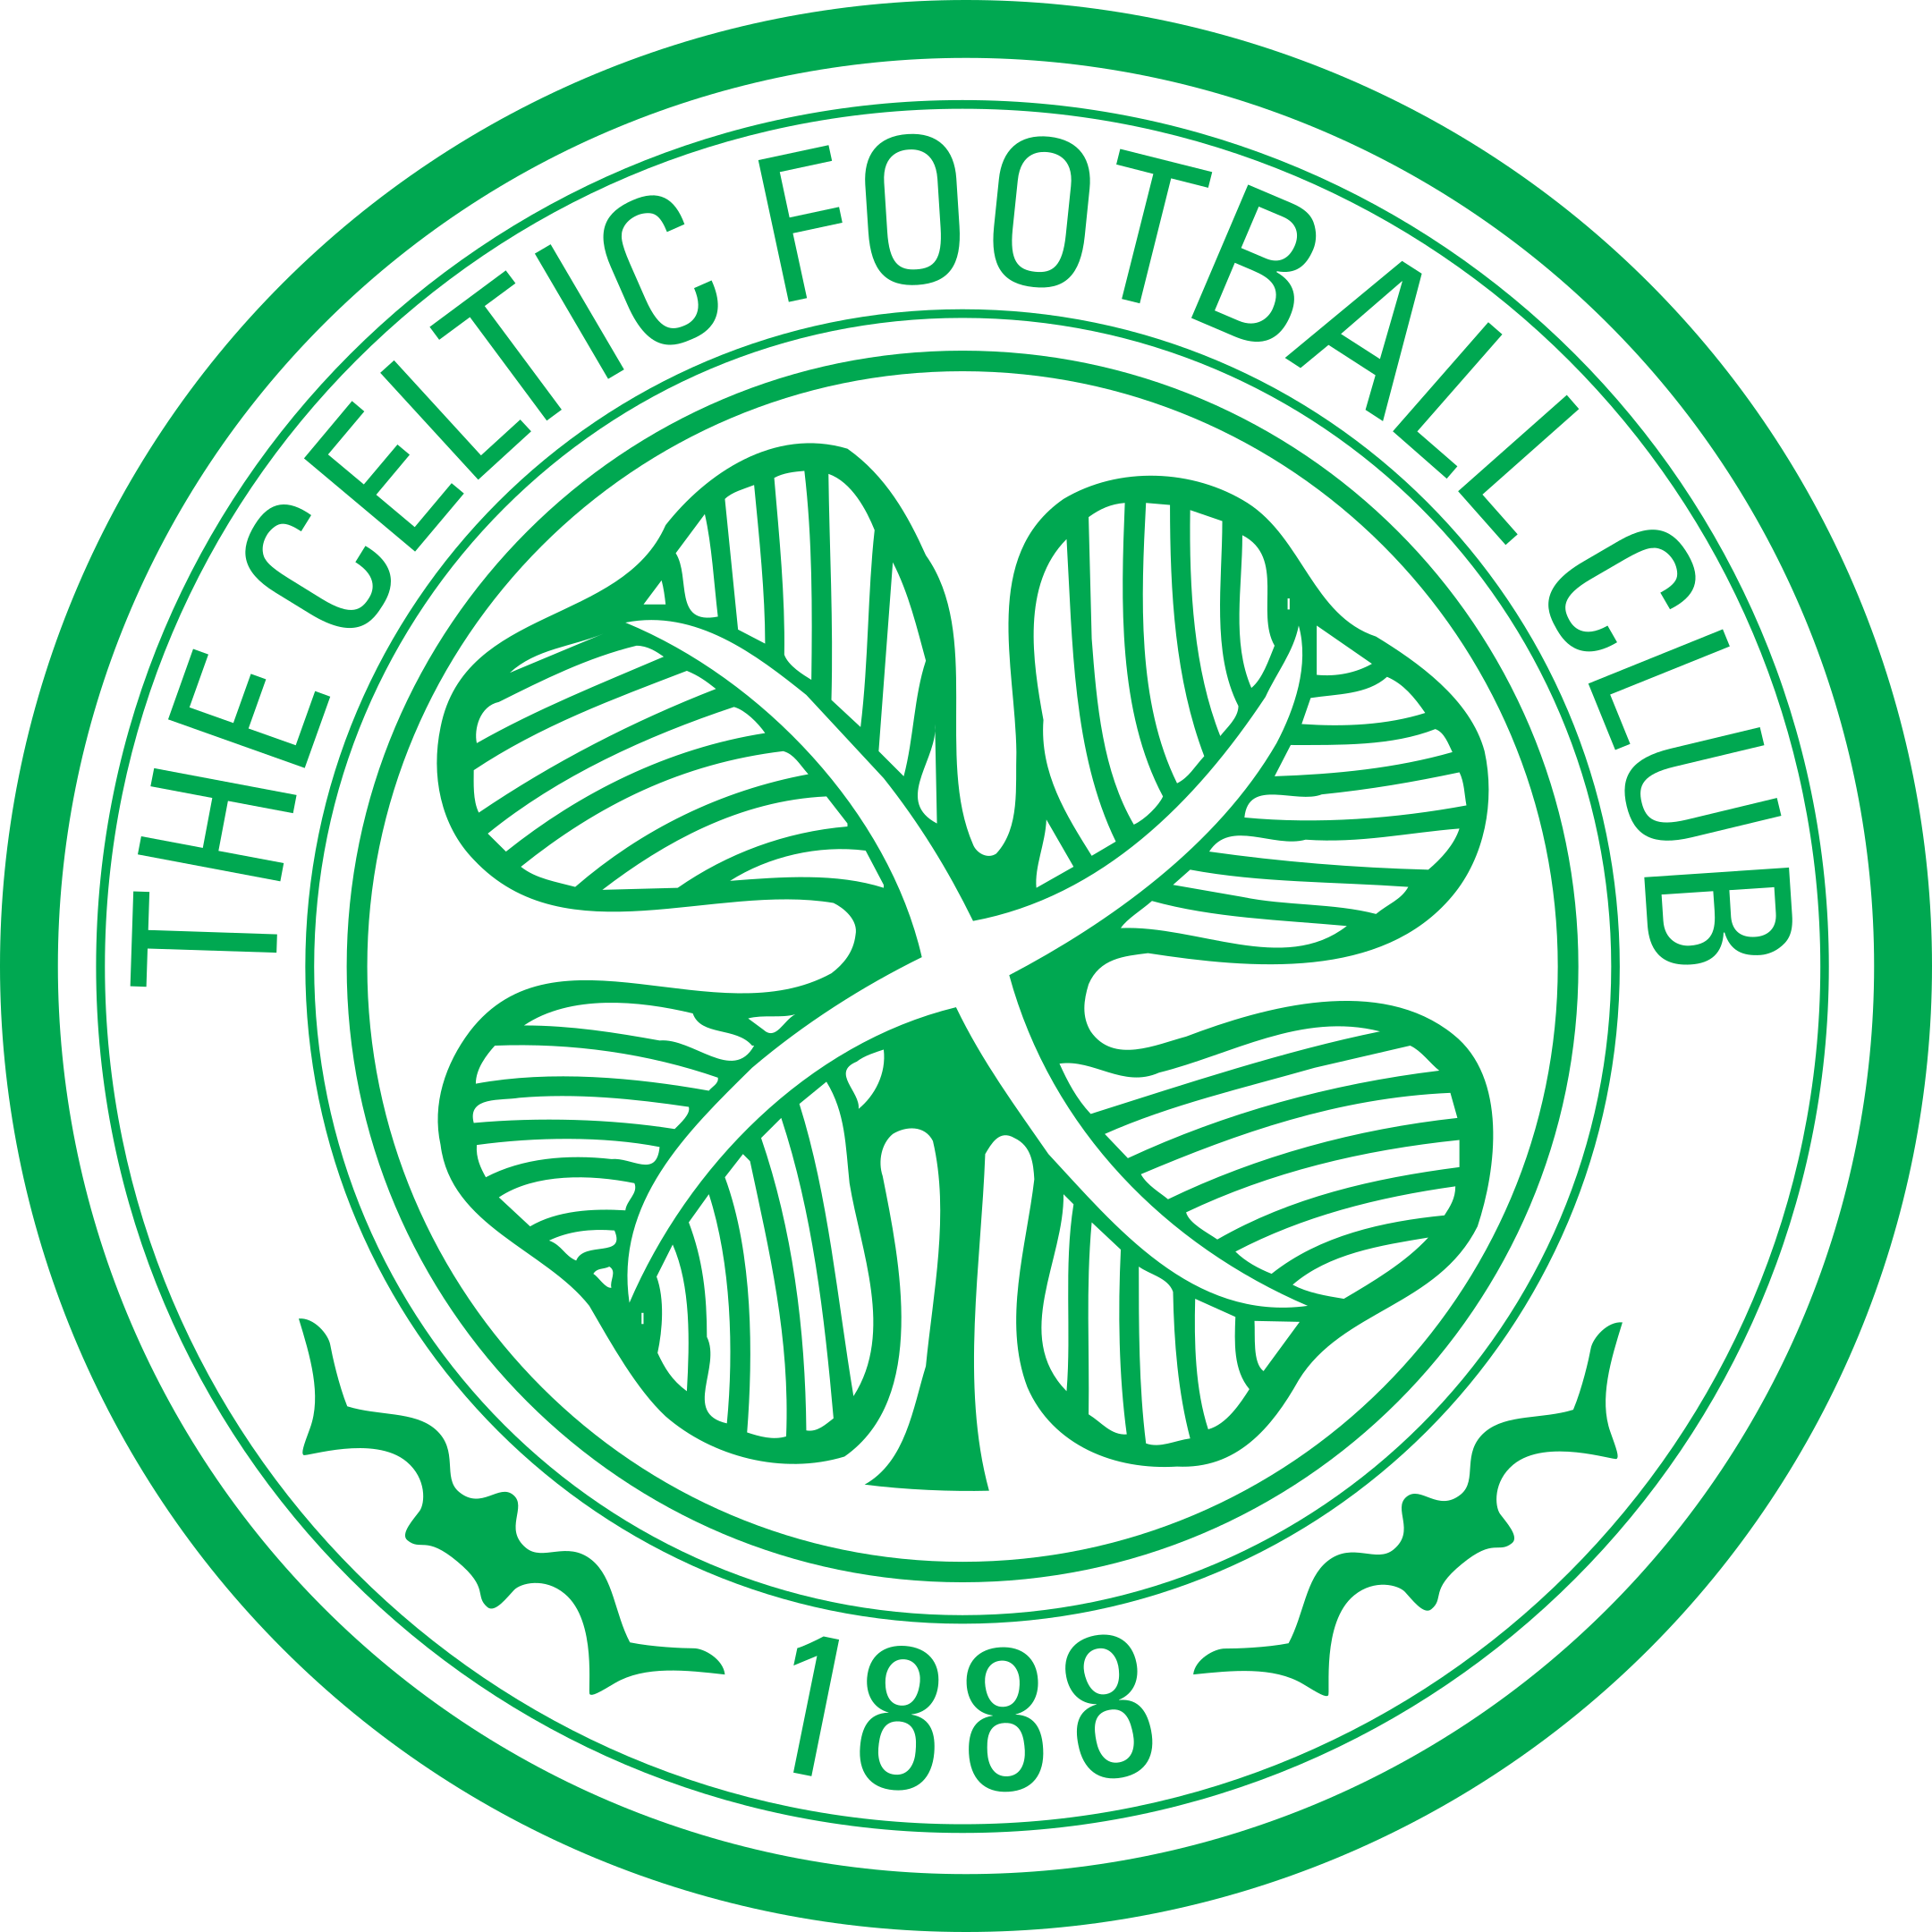 celtic fc logo 1 - Celtic FC Logo